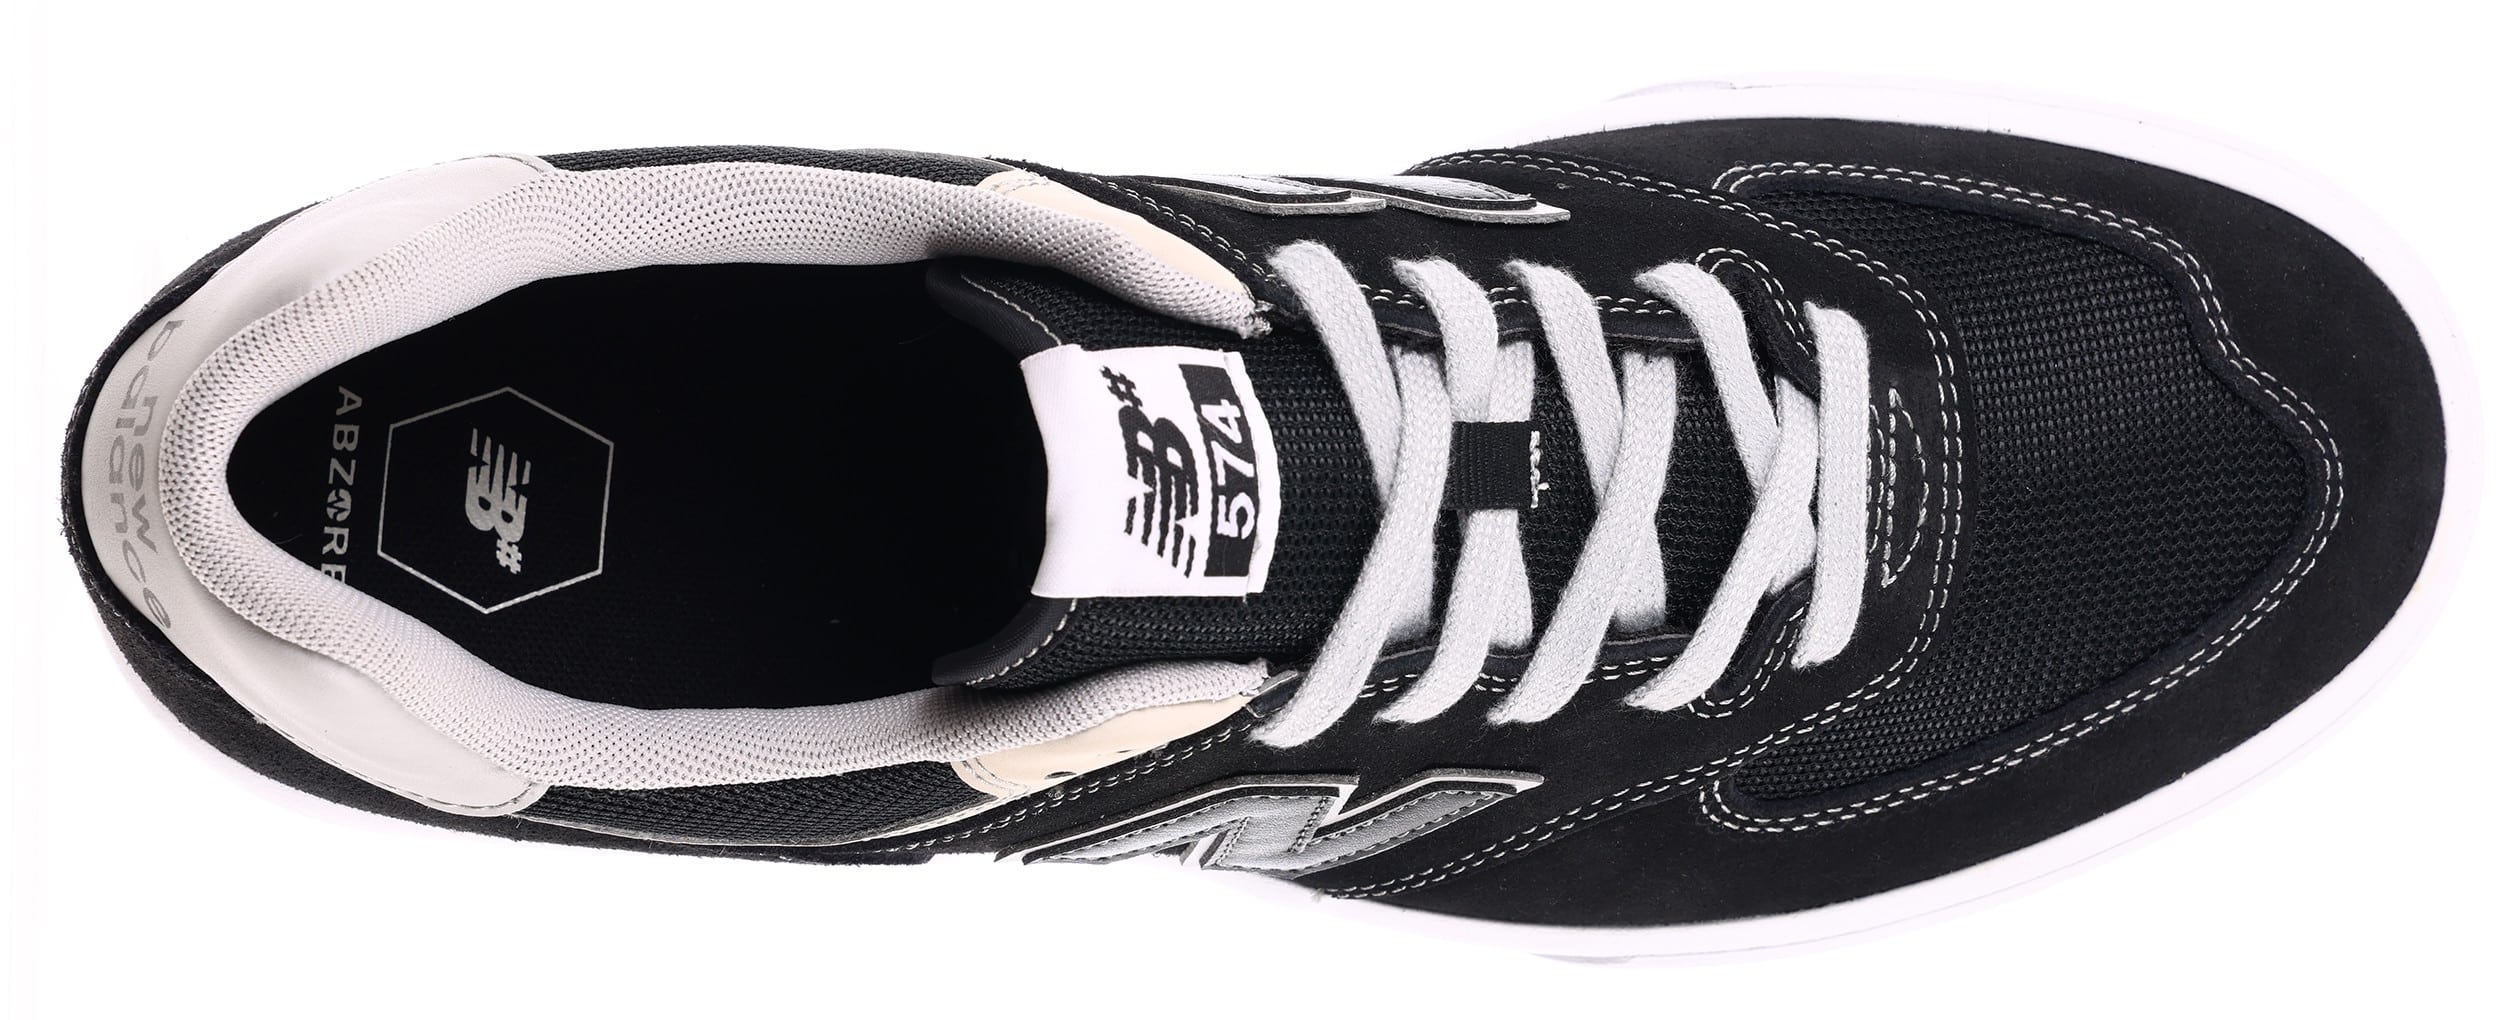 New Balance Numeric 574V Skate Shoes - black/grey | Tactics